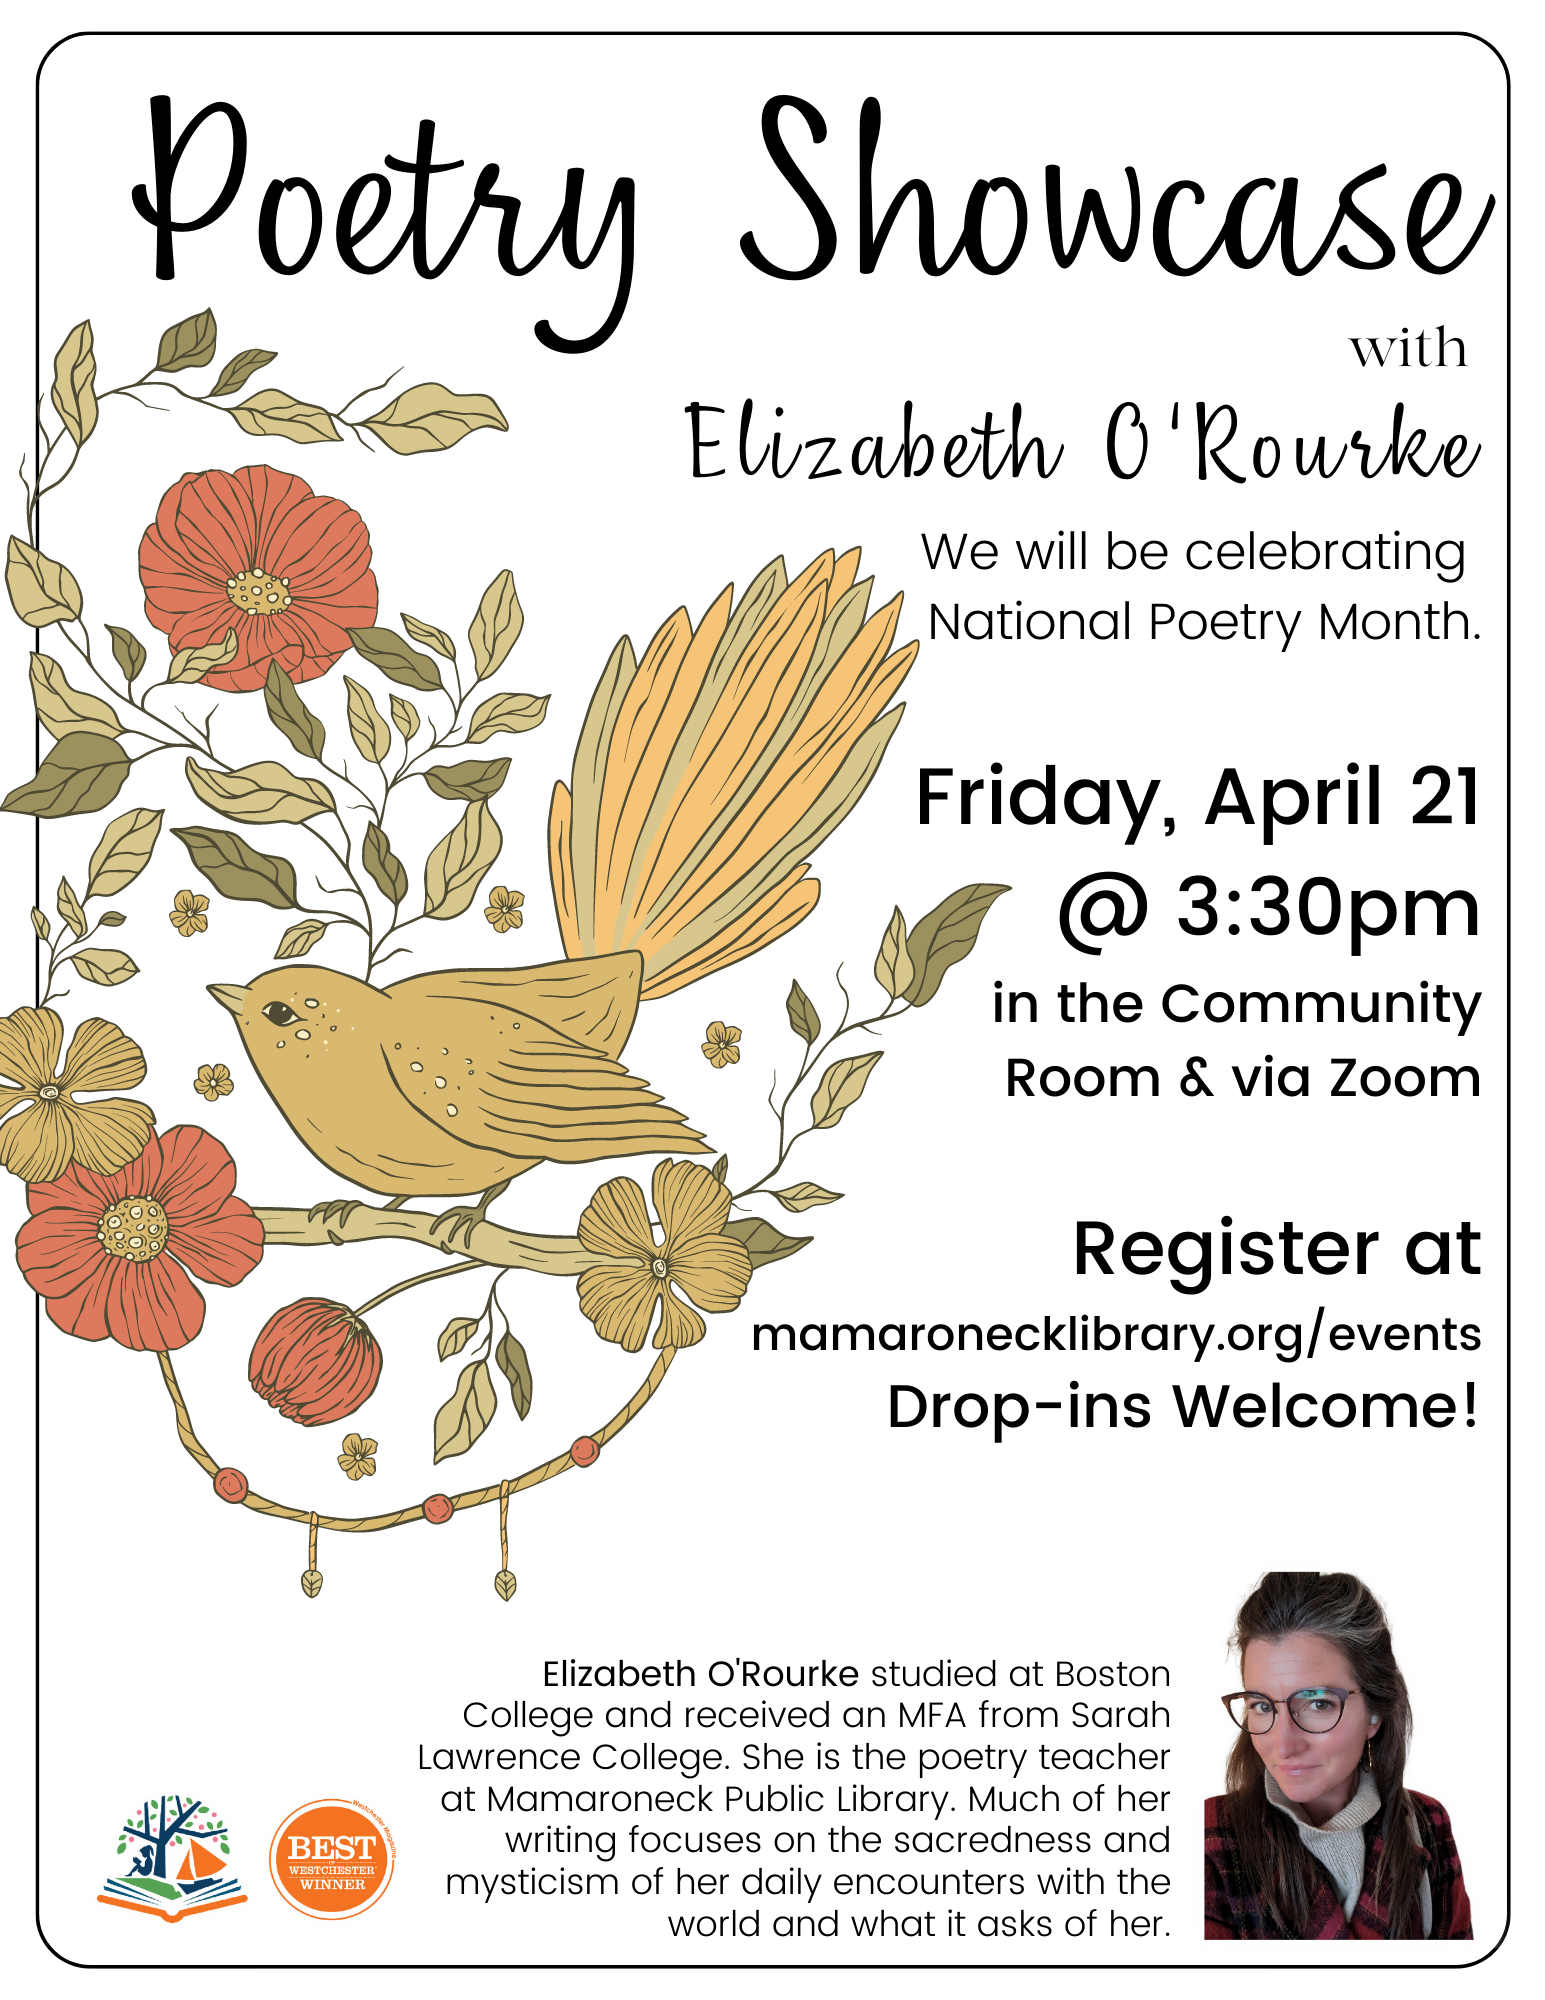 4/21 @ 3:30pm - Poetry Showcase in the community room & via zoom